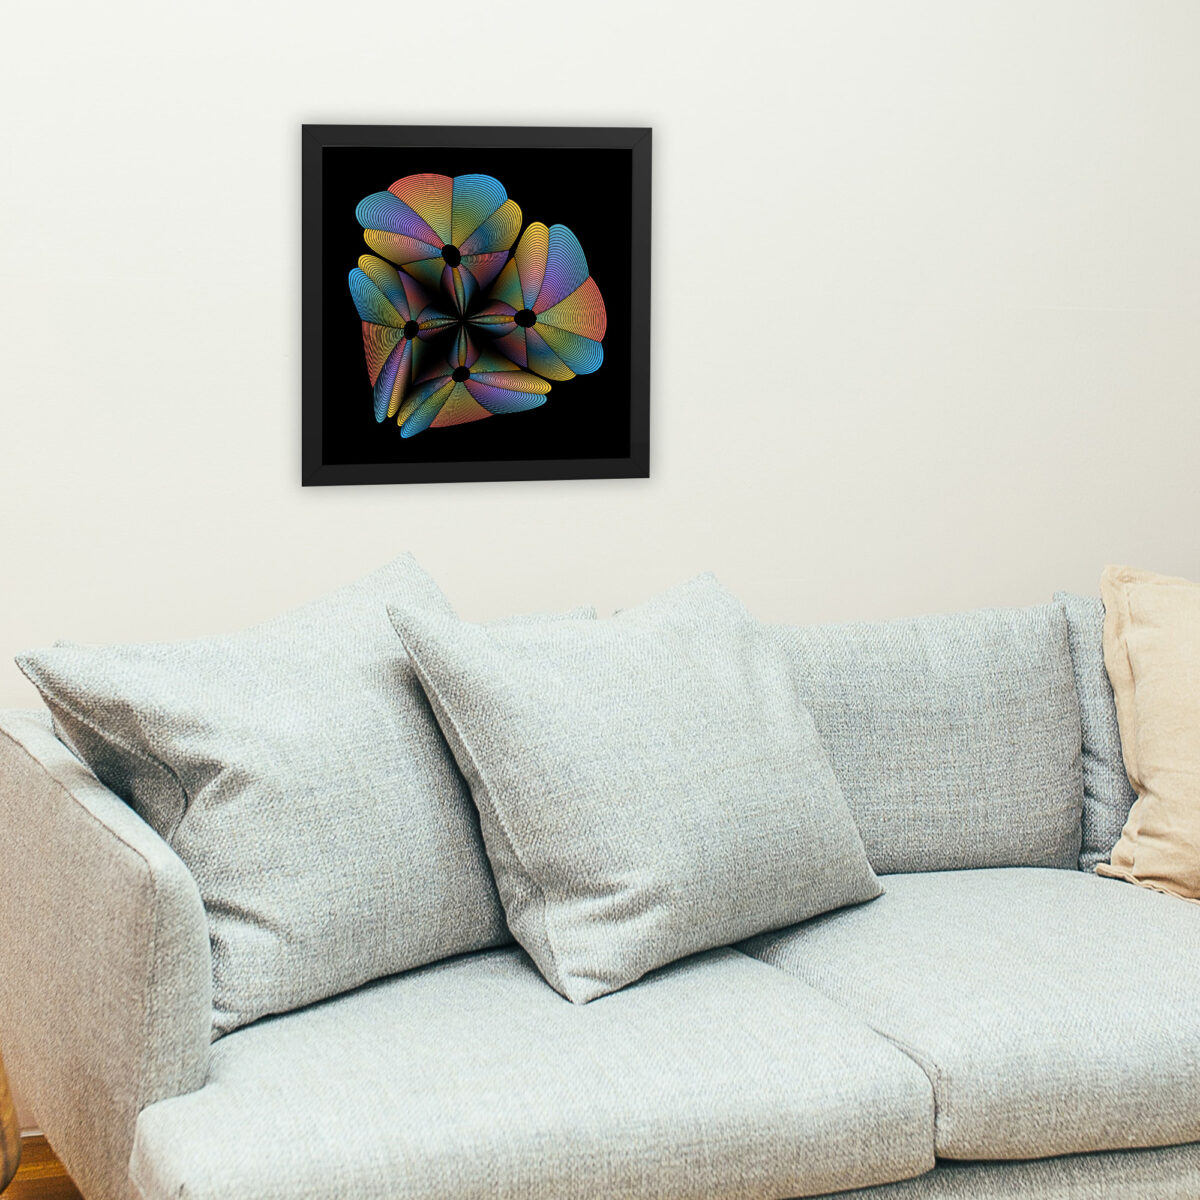 Black framed Big Bang art print hanging on a wall